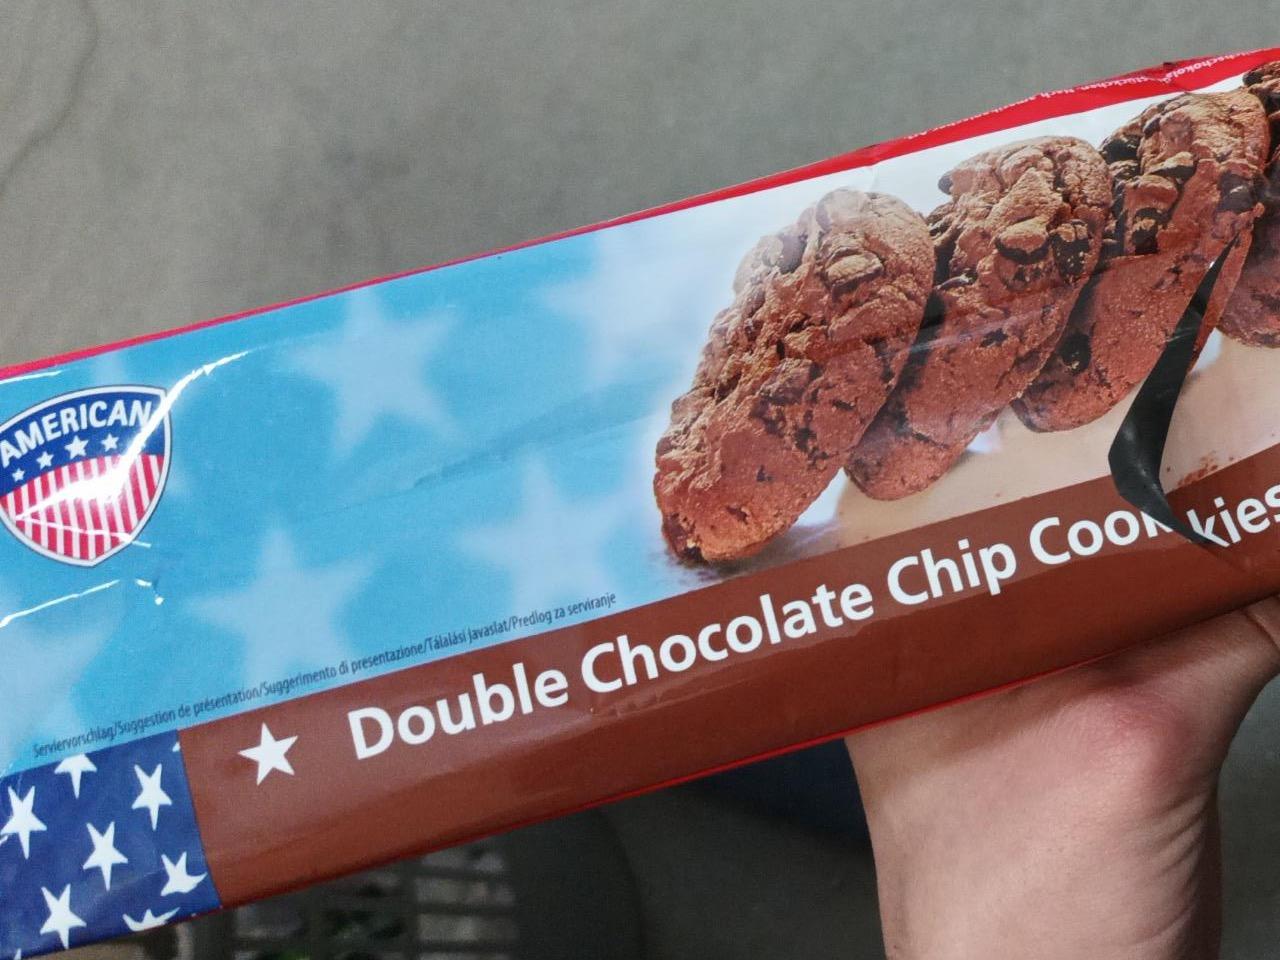 Képek - Double chocholate chip cookies American